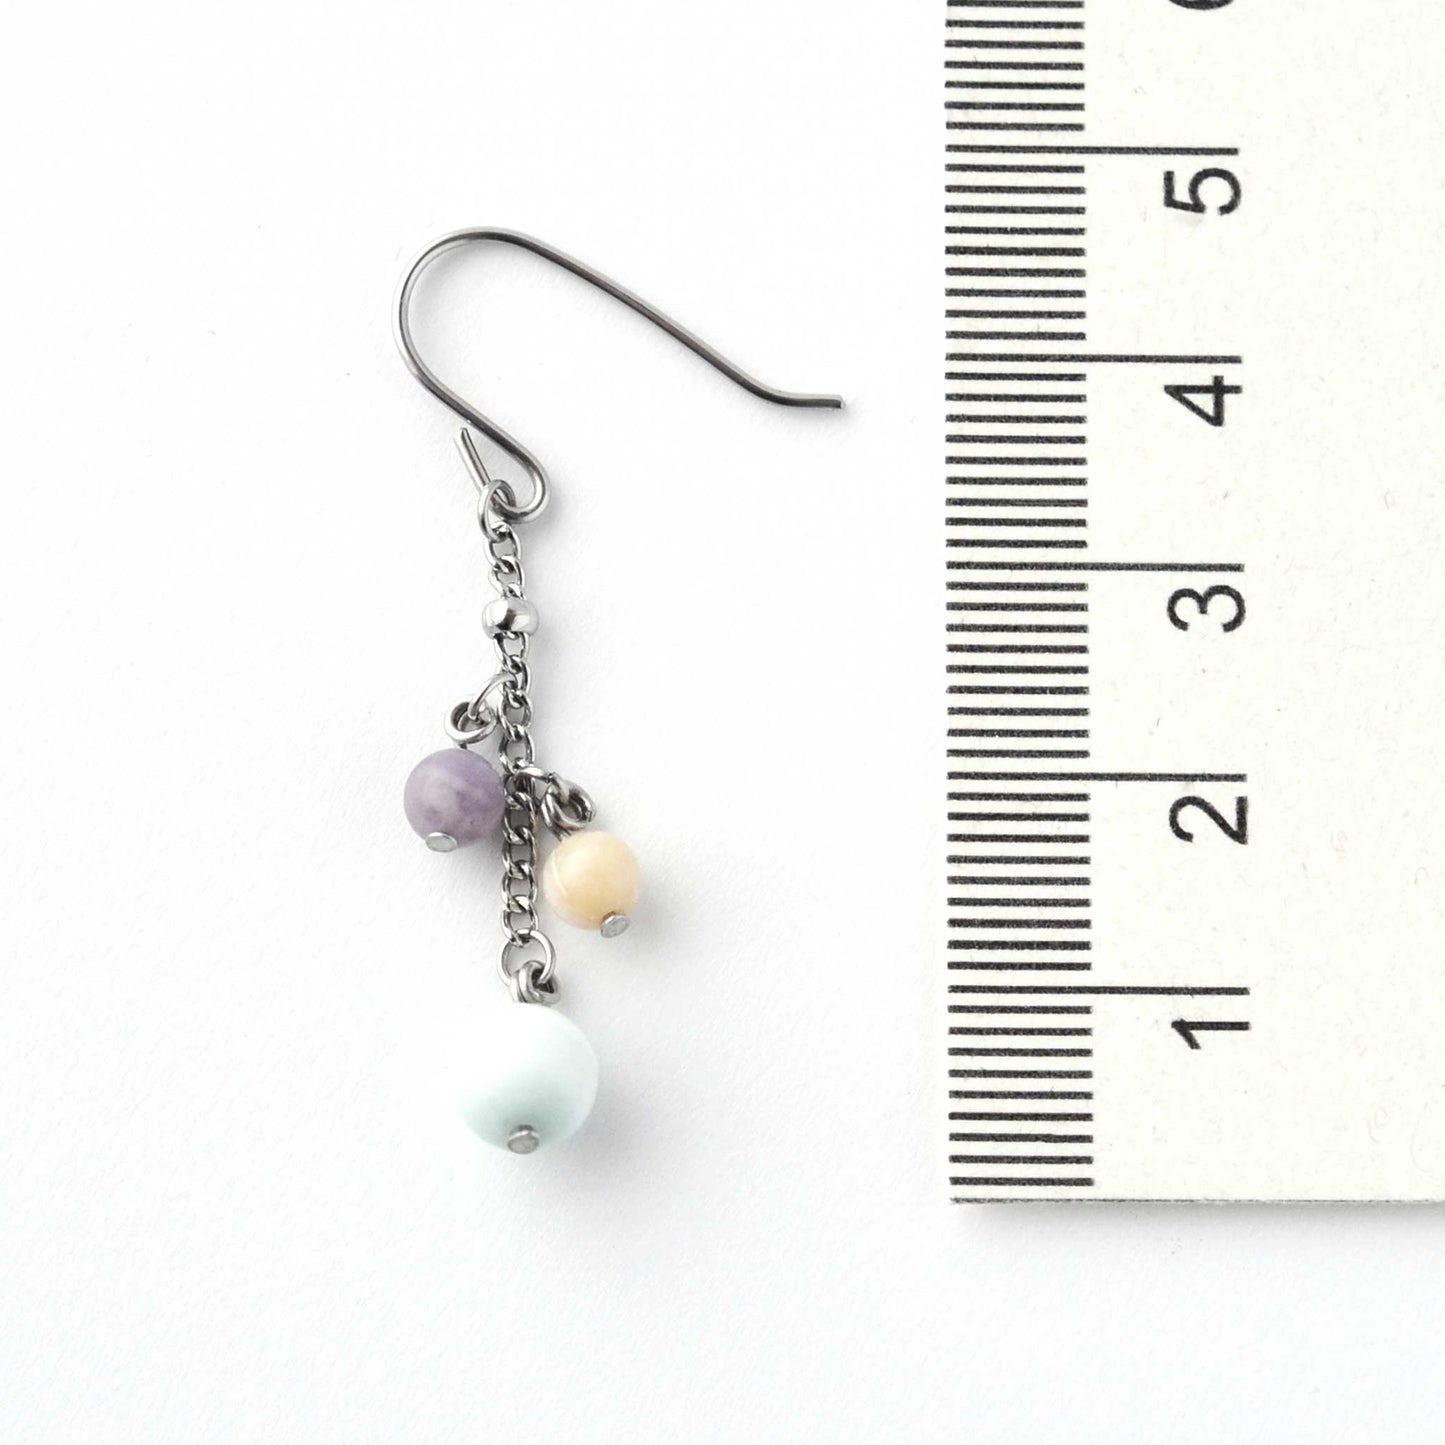 Pastel gemstone beads drop earring next to ruler showing 4.5cm length